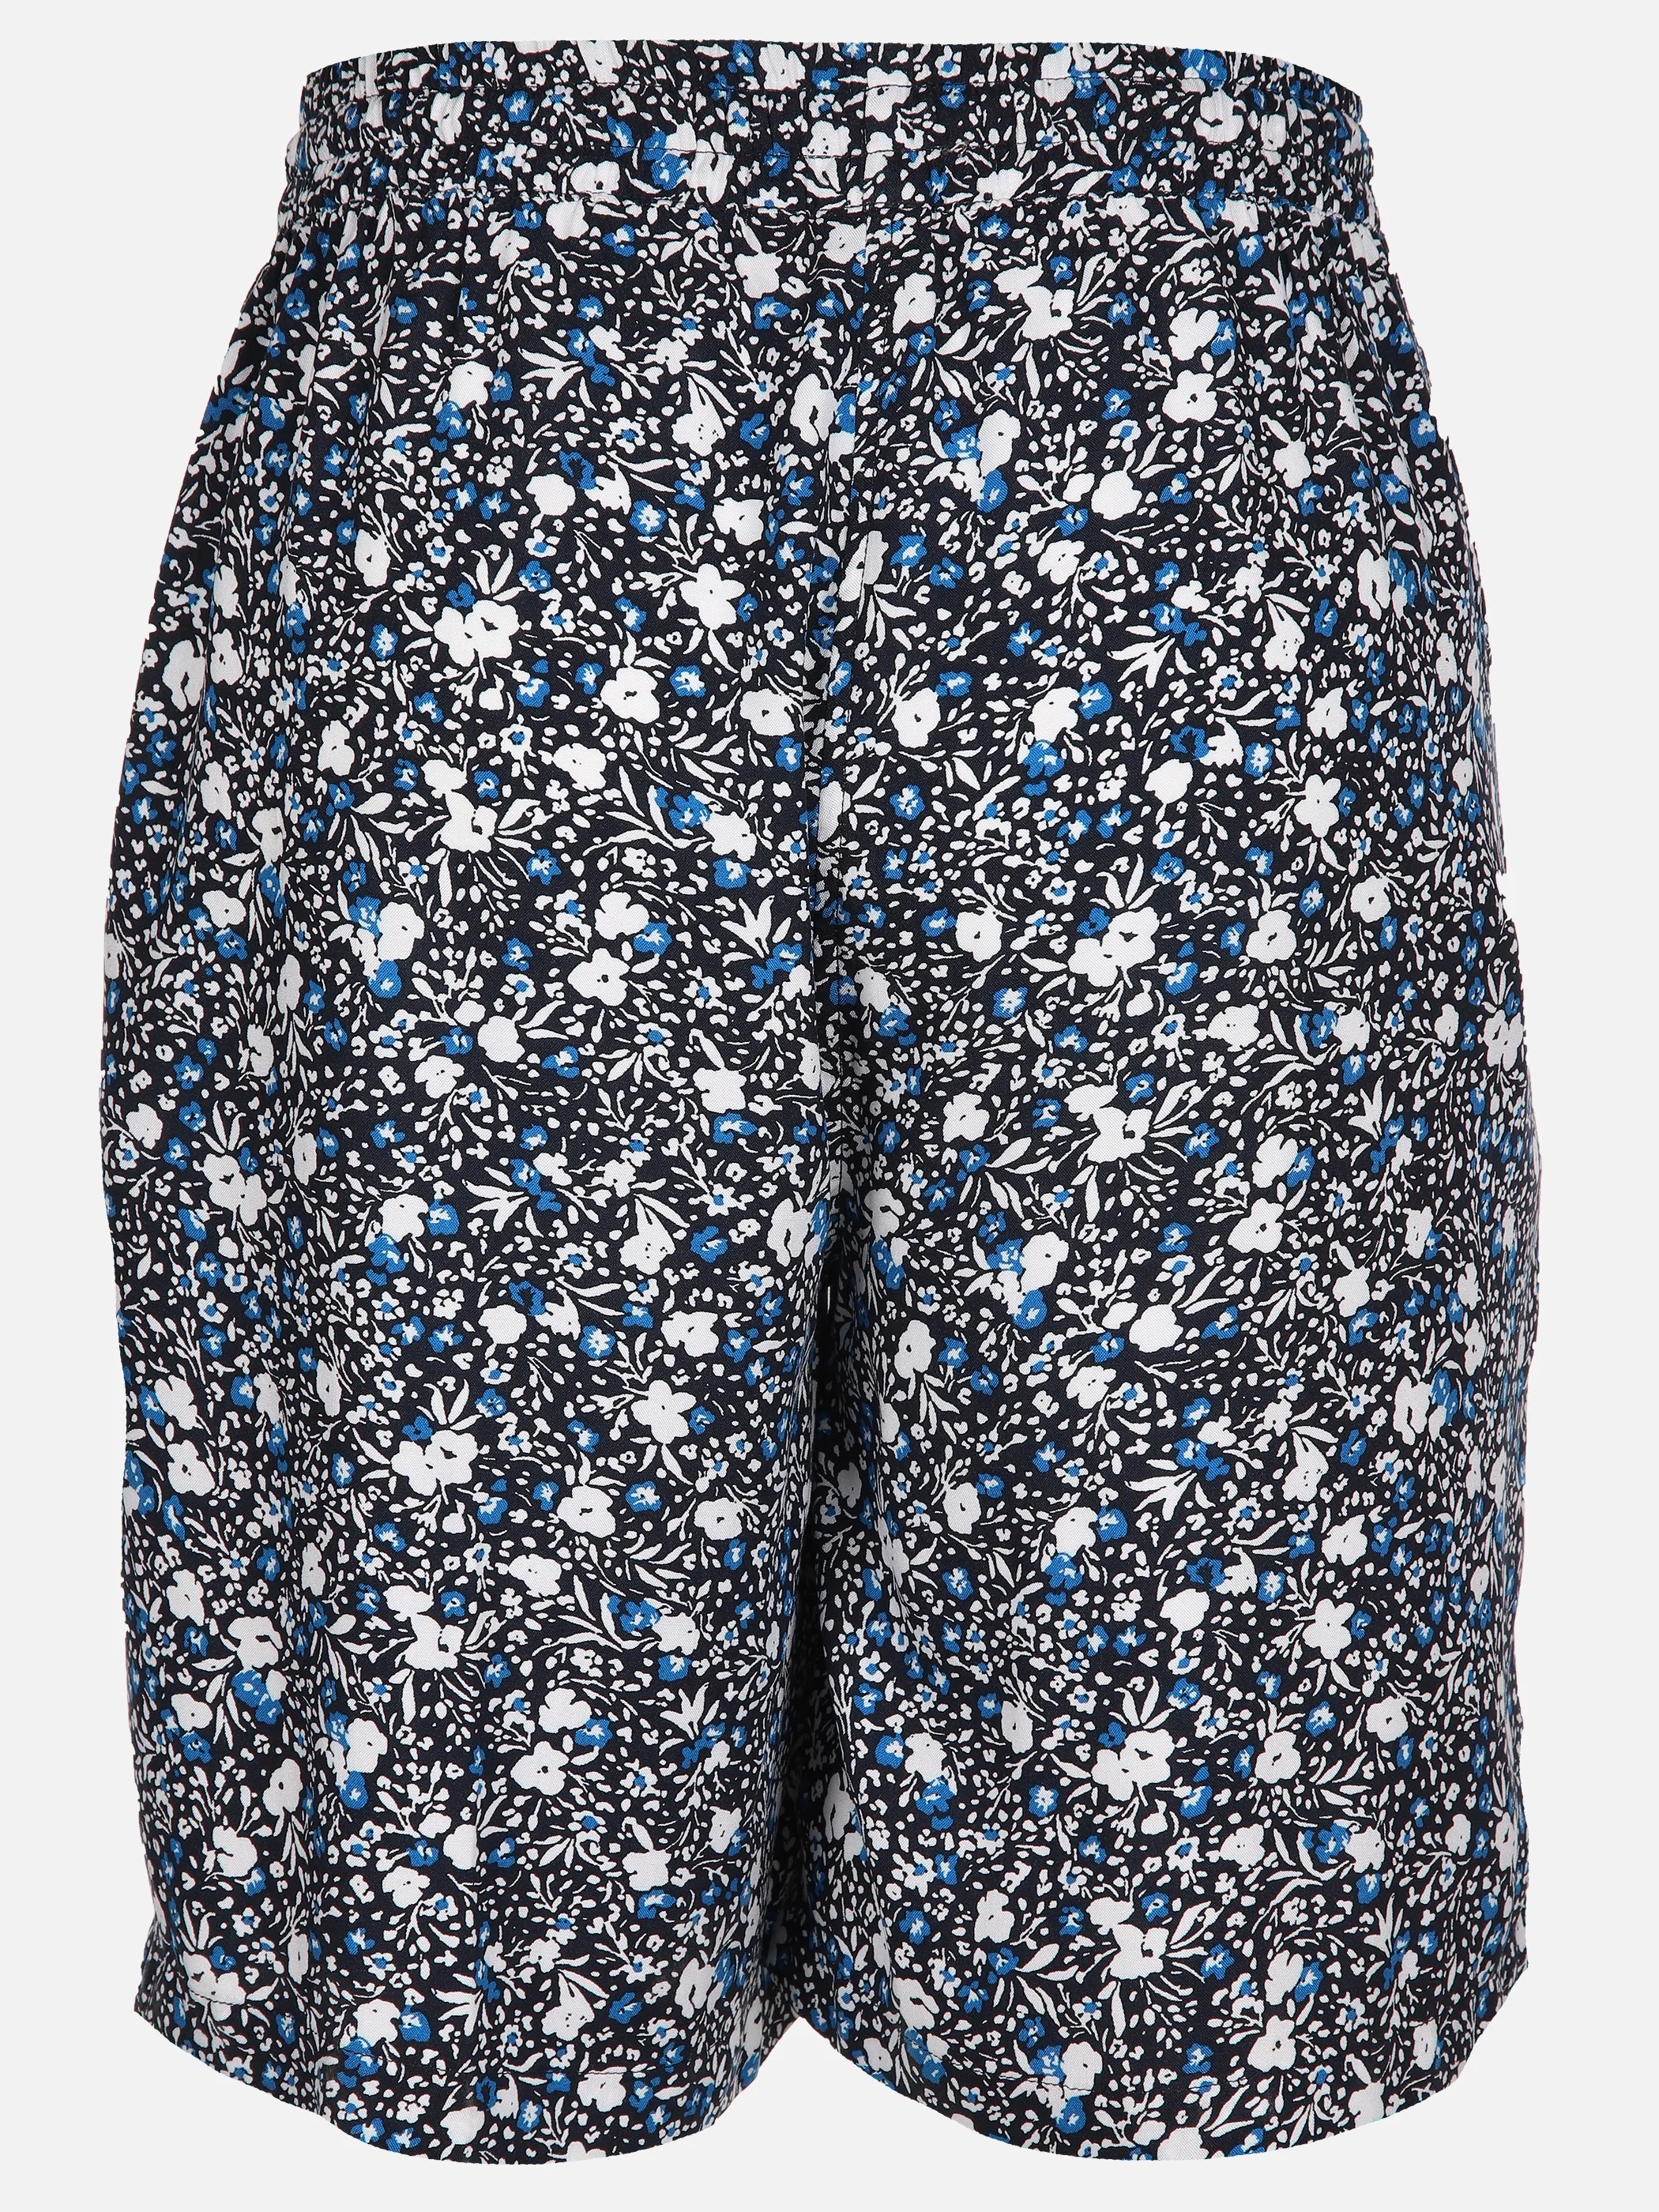 Sure Da-Shorts mit Print Blau 892525 FLOWERSBL 2